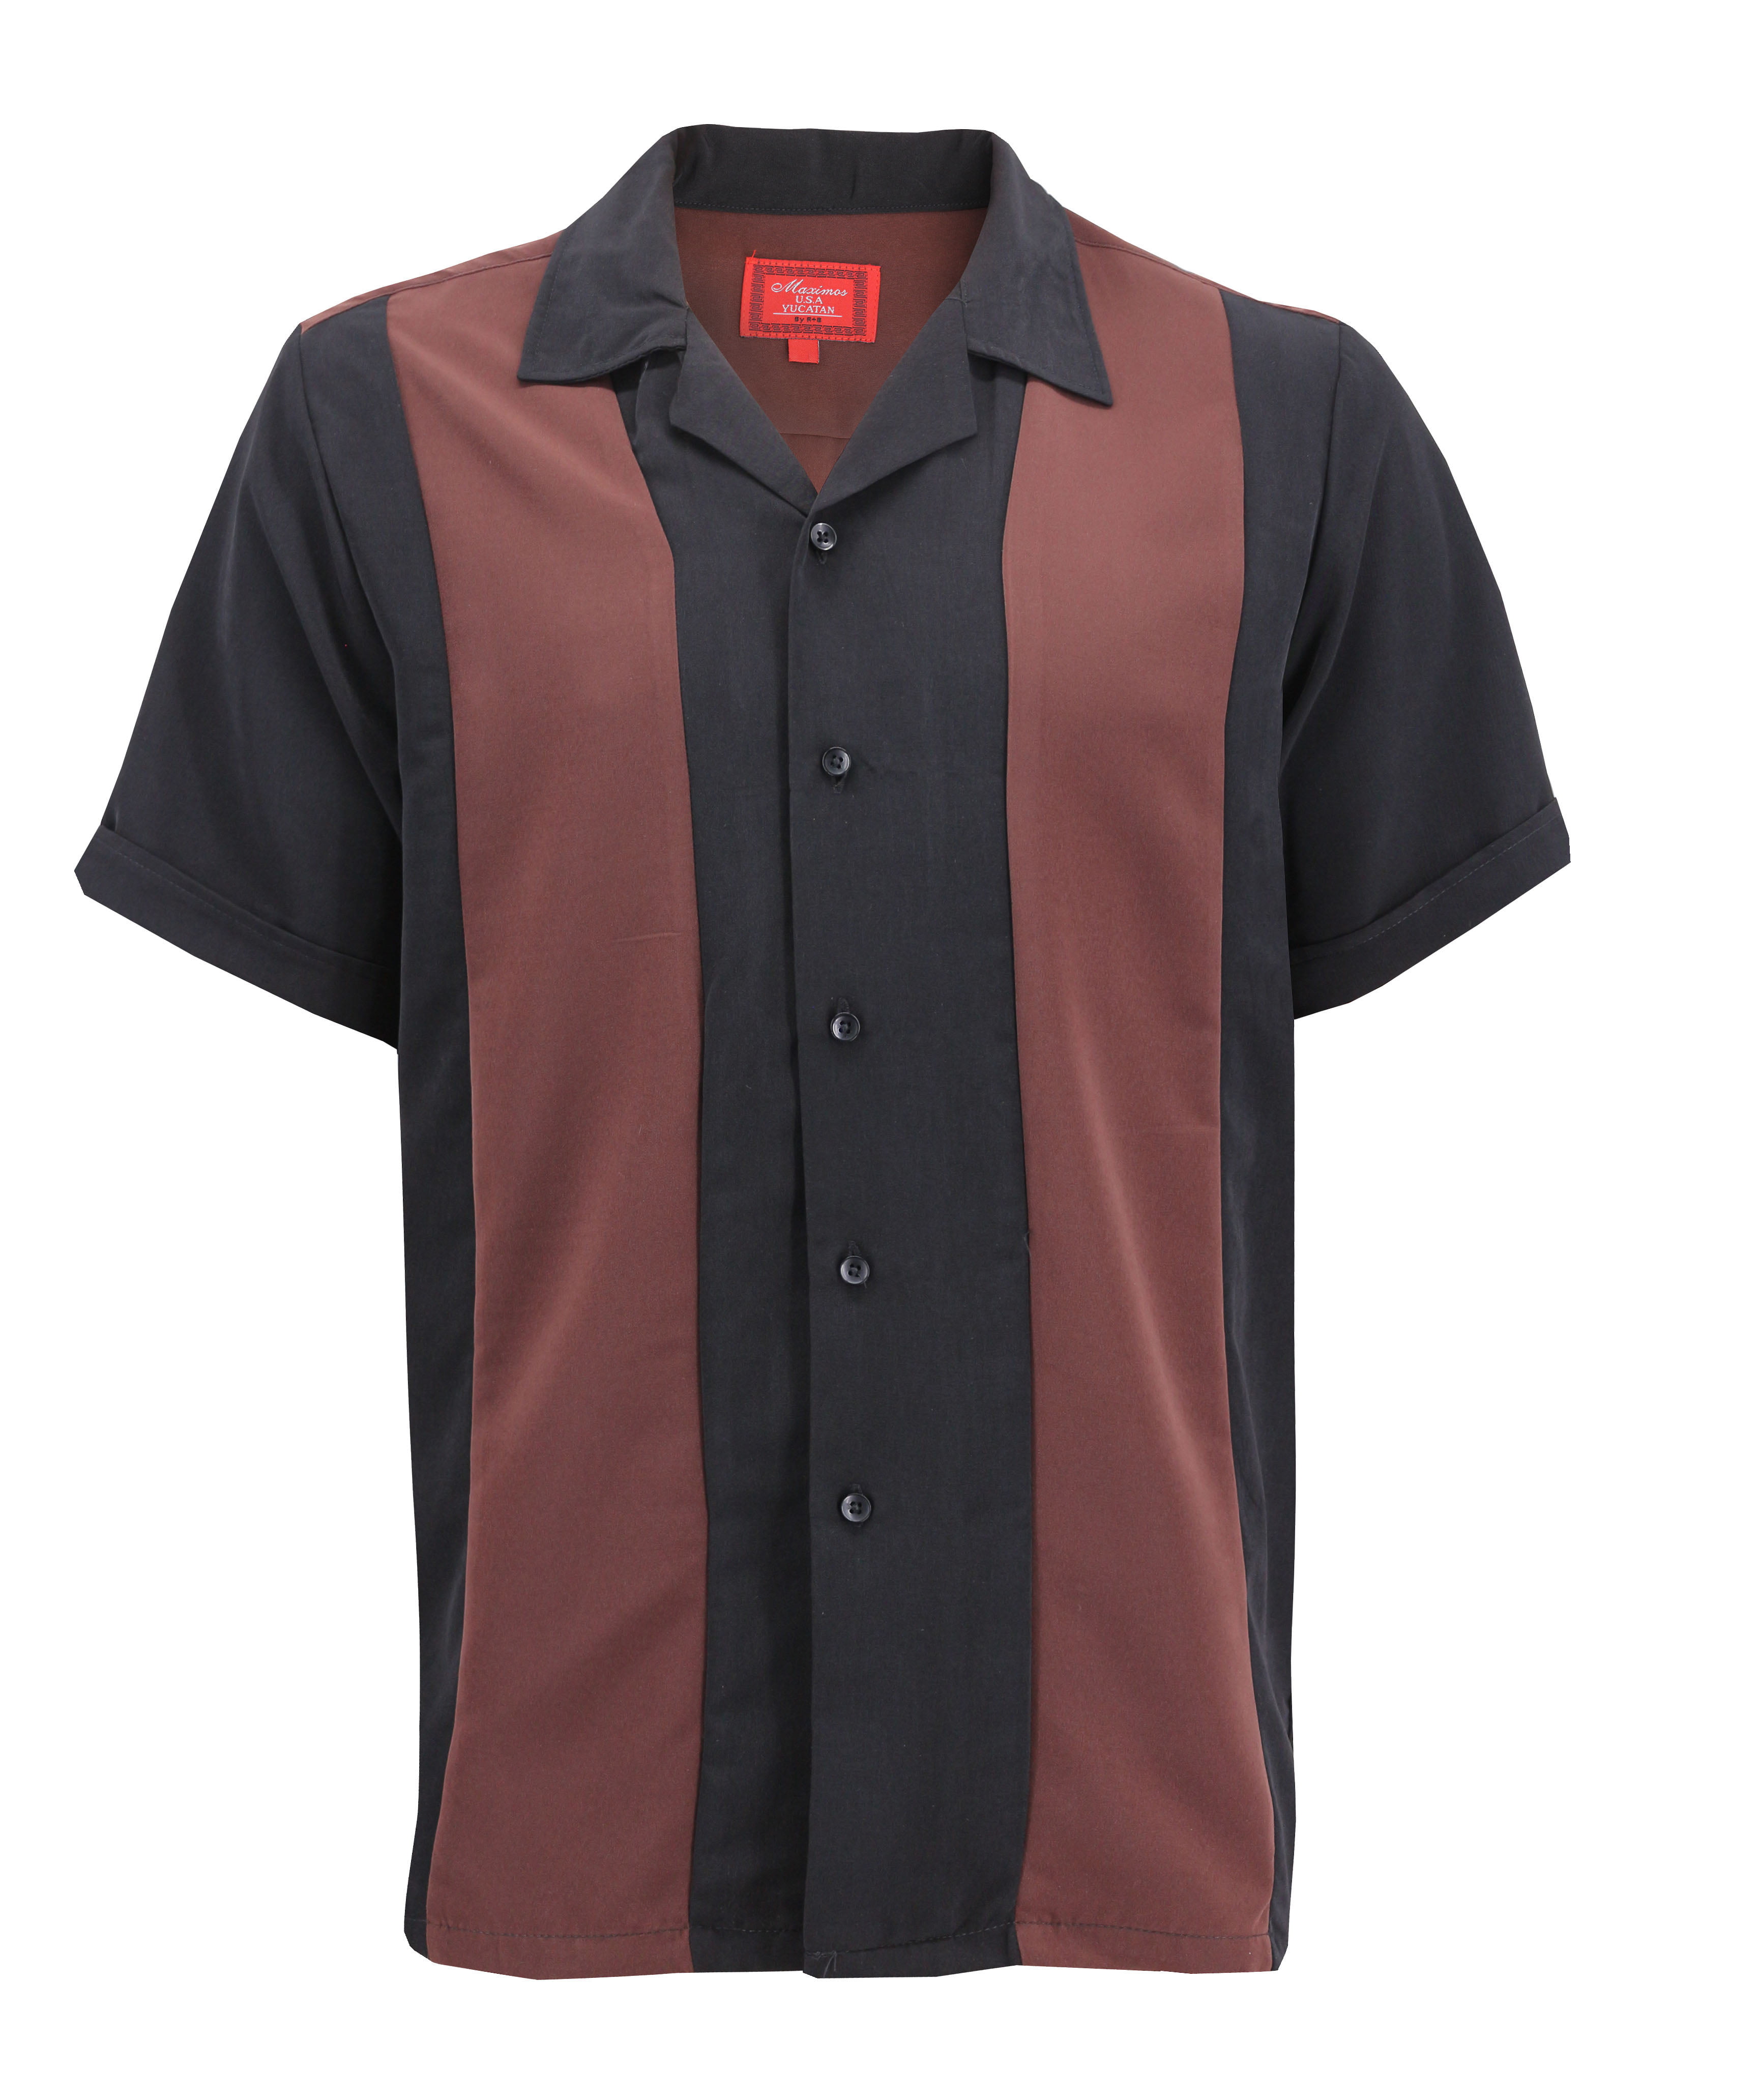 Maximos - Men's Two Tone Bowling Casual Dress Shirt (Dark Brown / Black